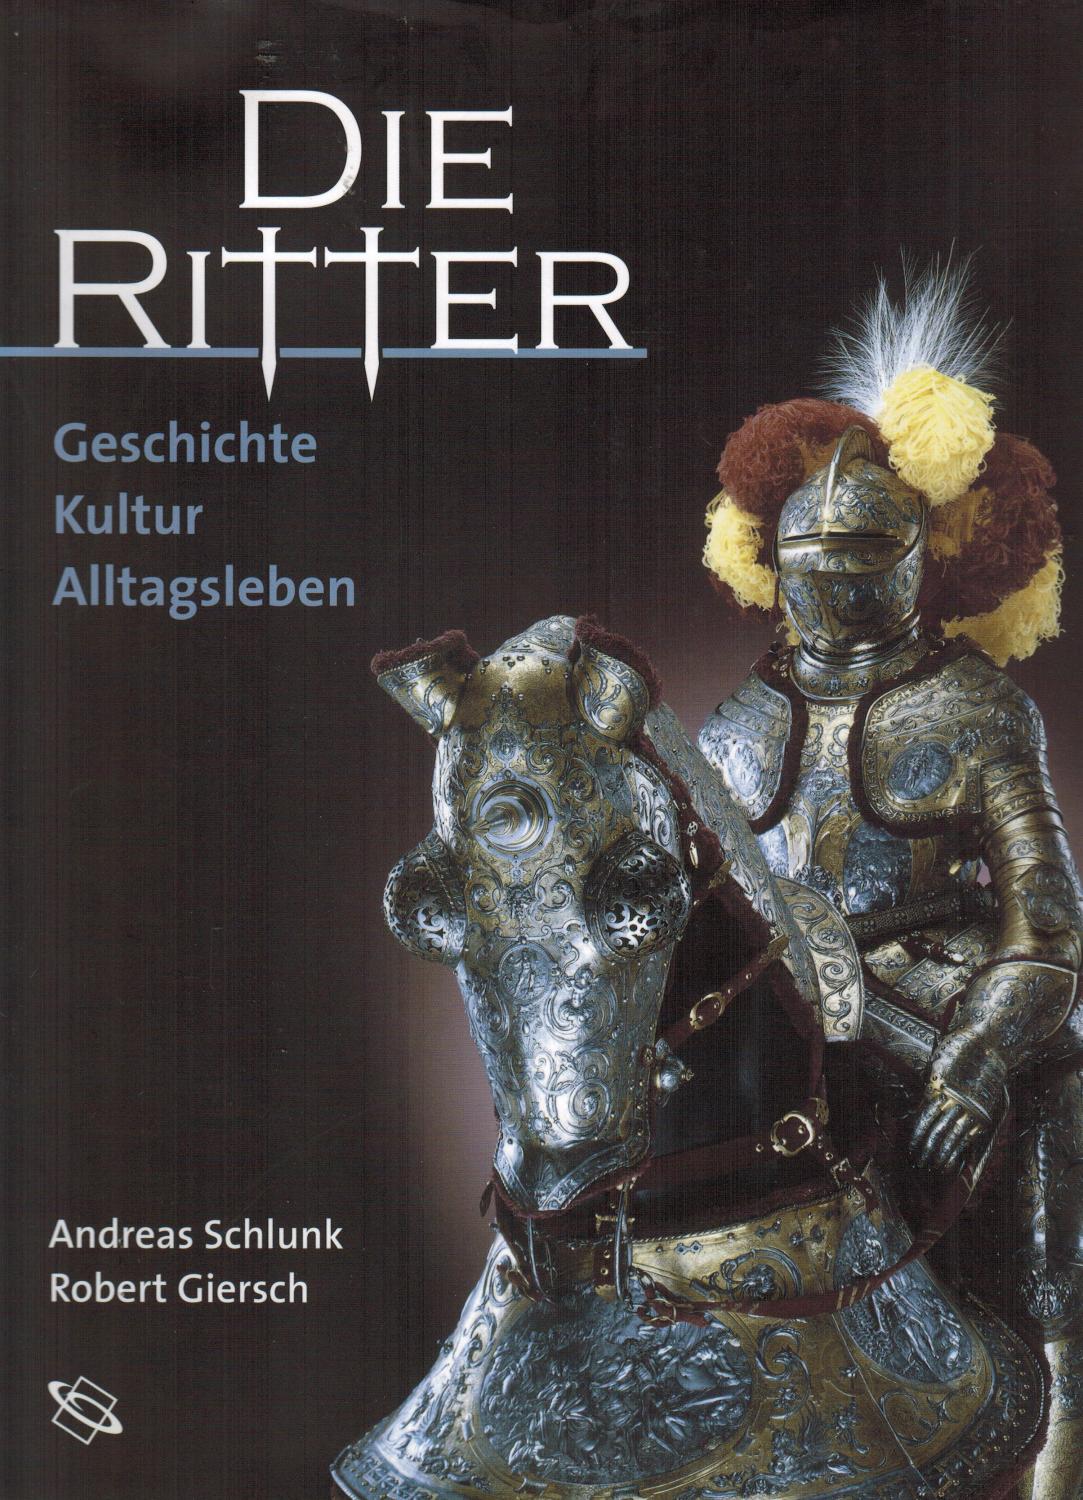 Die Ritter. Geschichte - Kultur - Alltagsleben